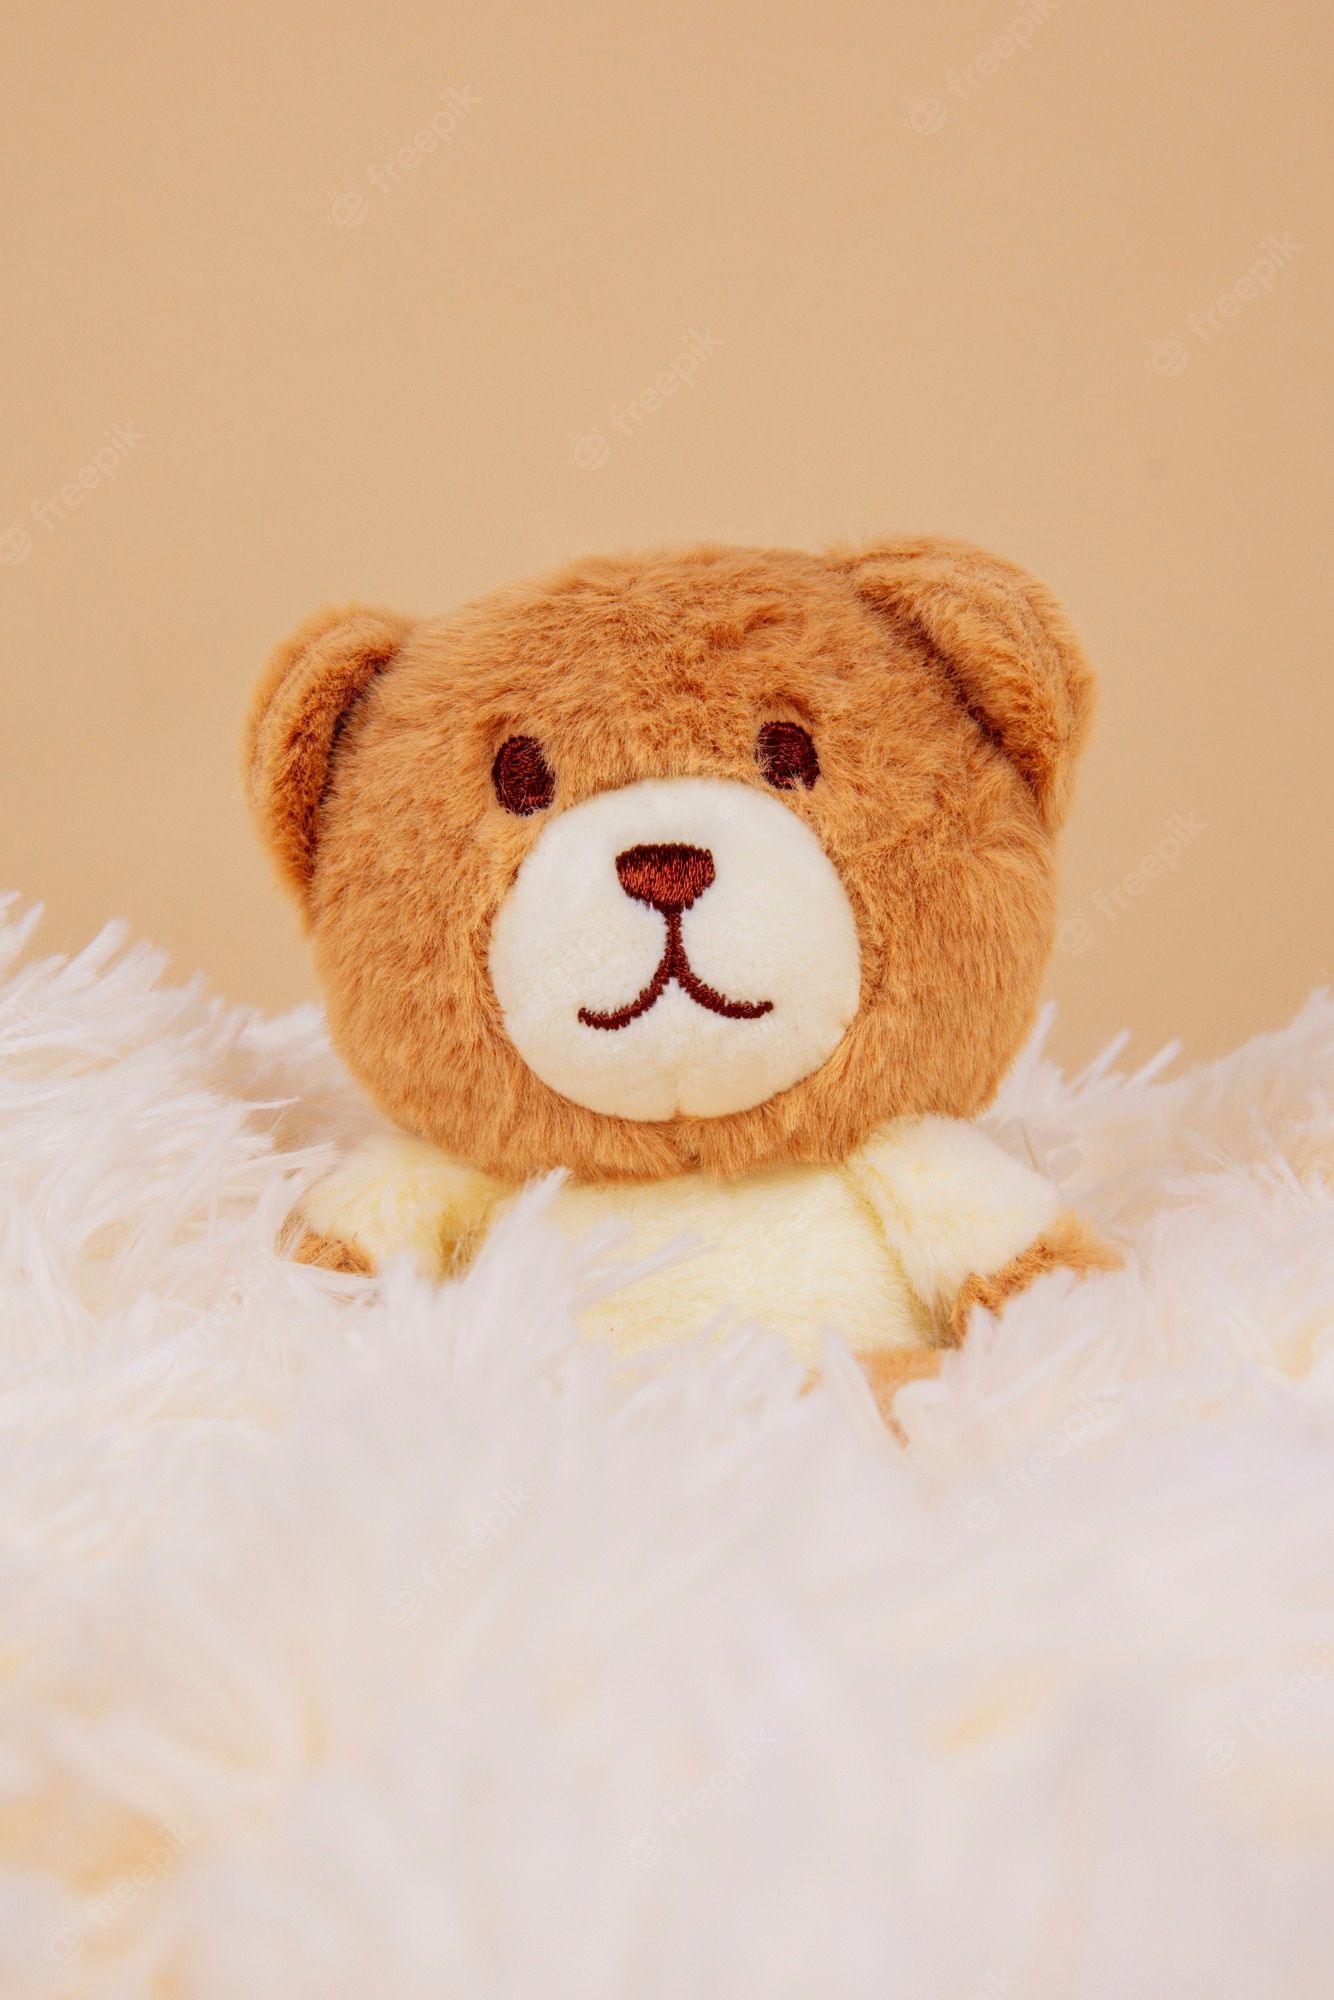 Cute Teddy Bear Picture